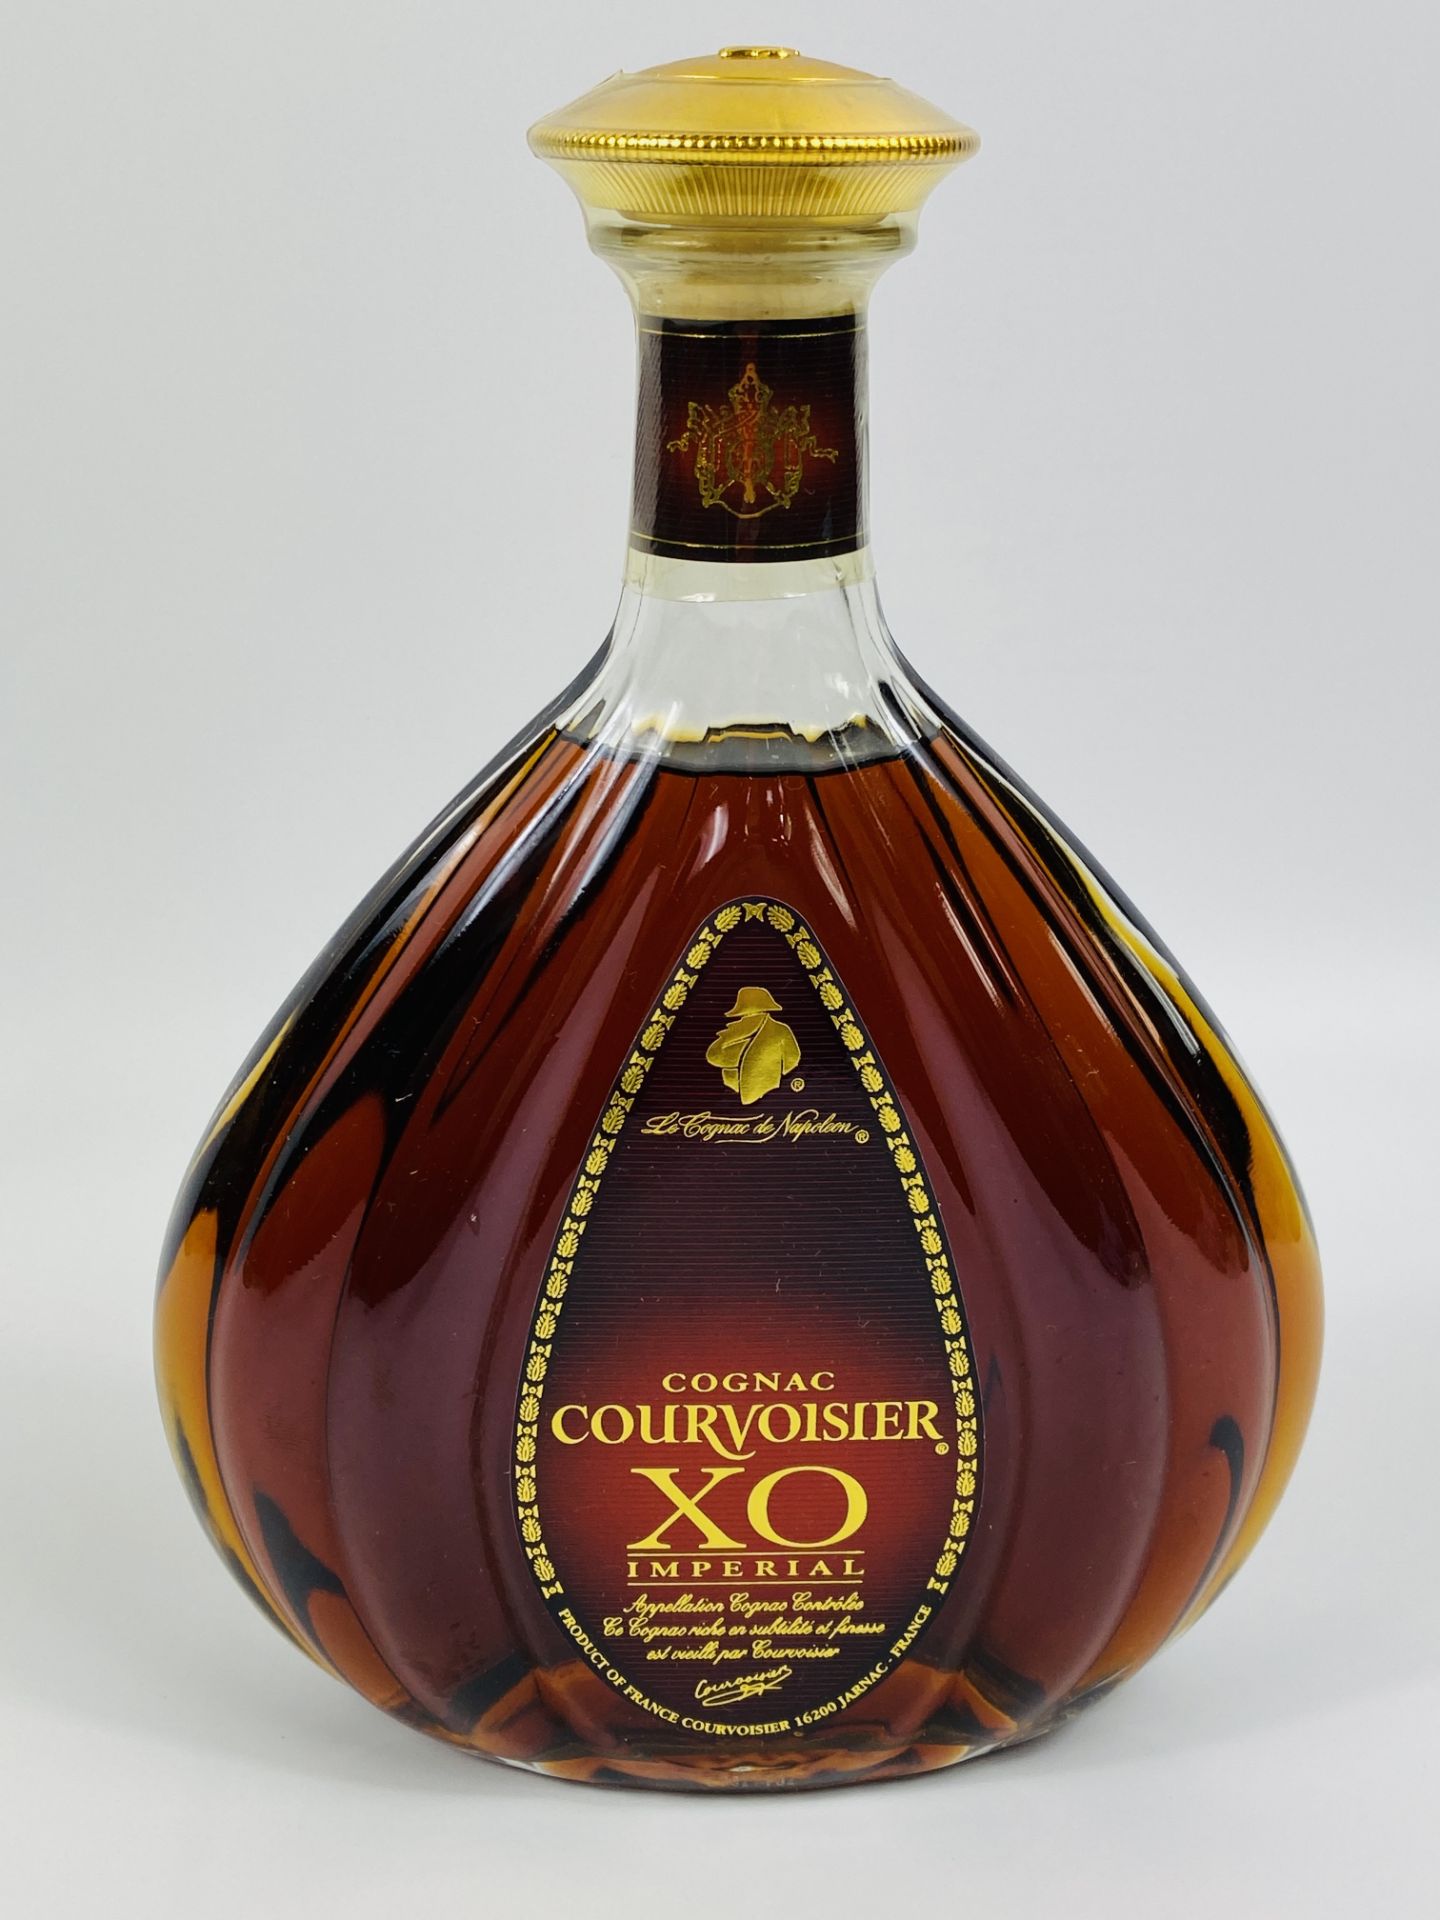 70cl bottle of Cognac Courvoisier XO Imperial in presentation box - Bild 2 aus 4